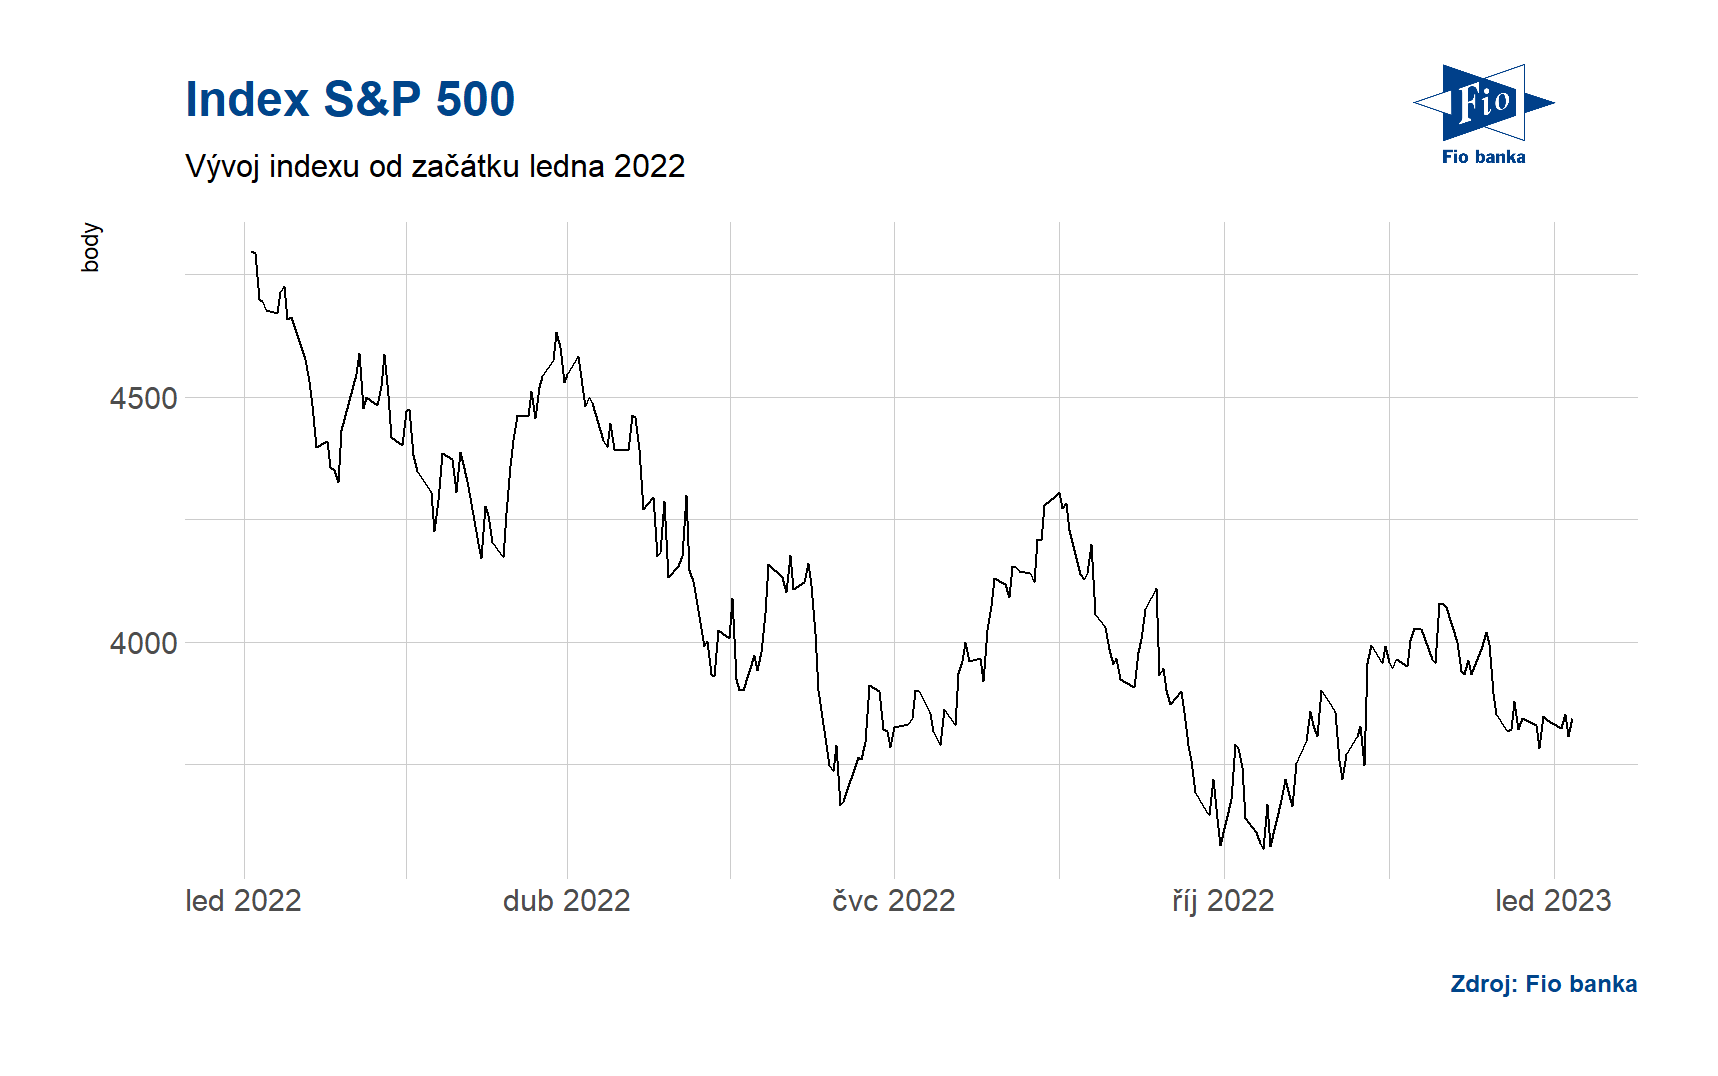 Vývoj indexu S&P 500 za rok 2022